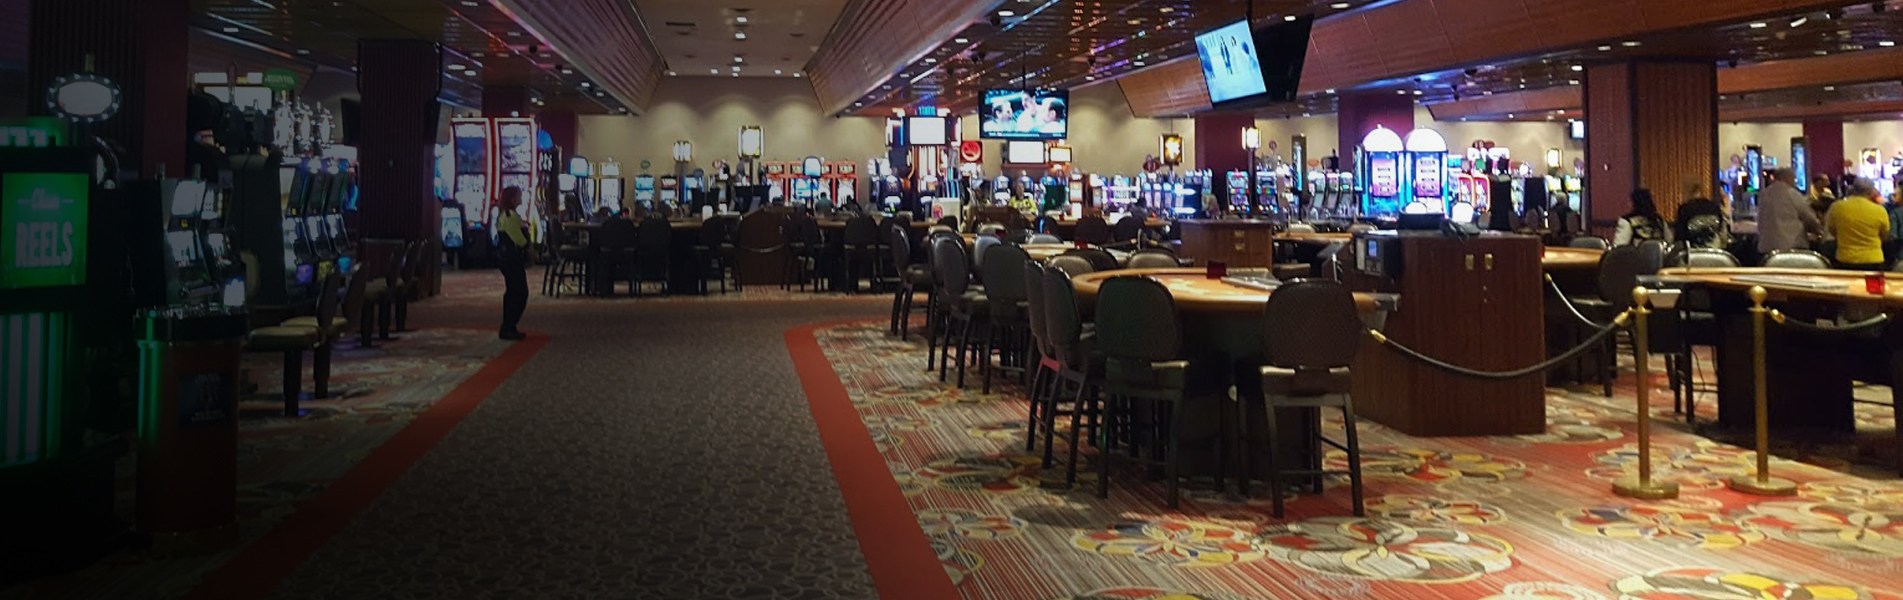 Ballys Casino Atlantic City 2